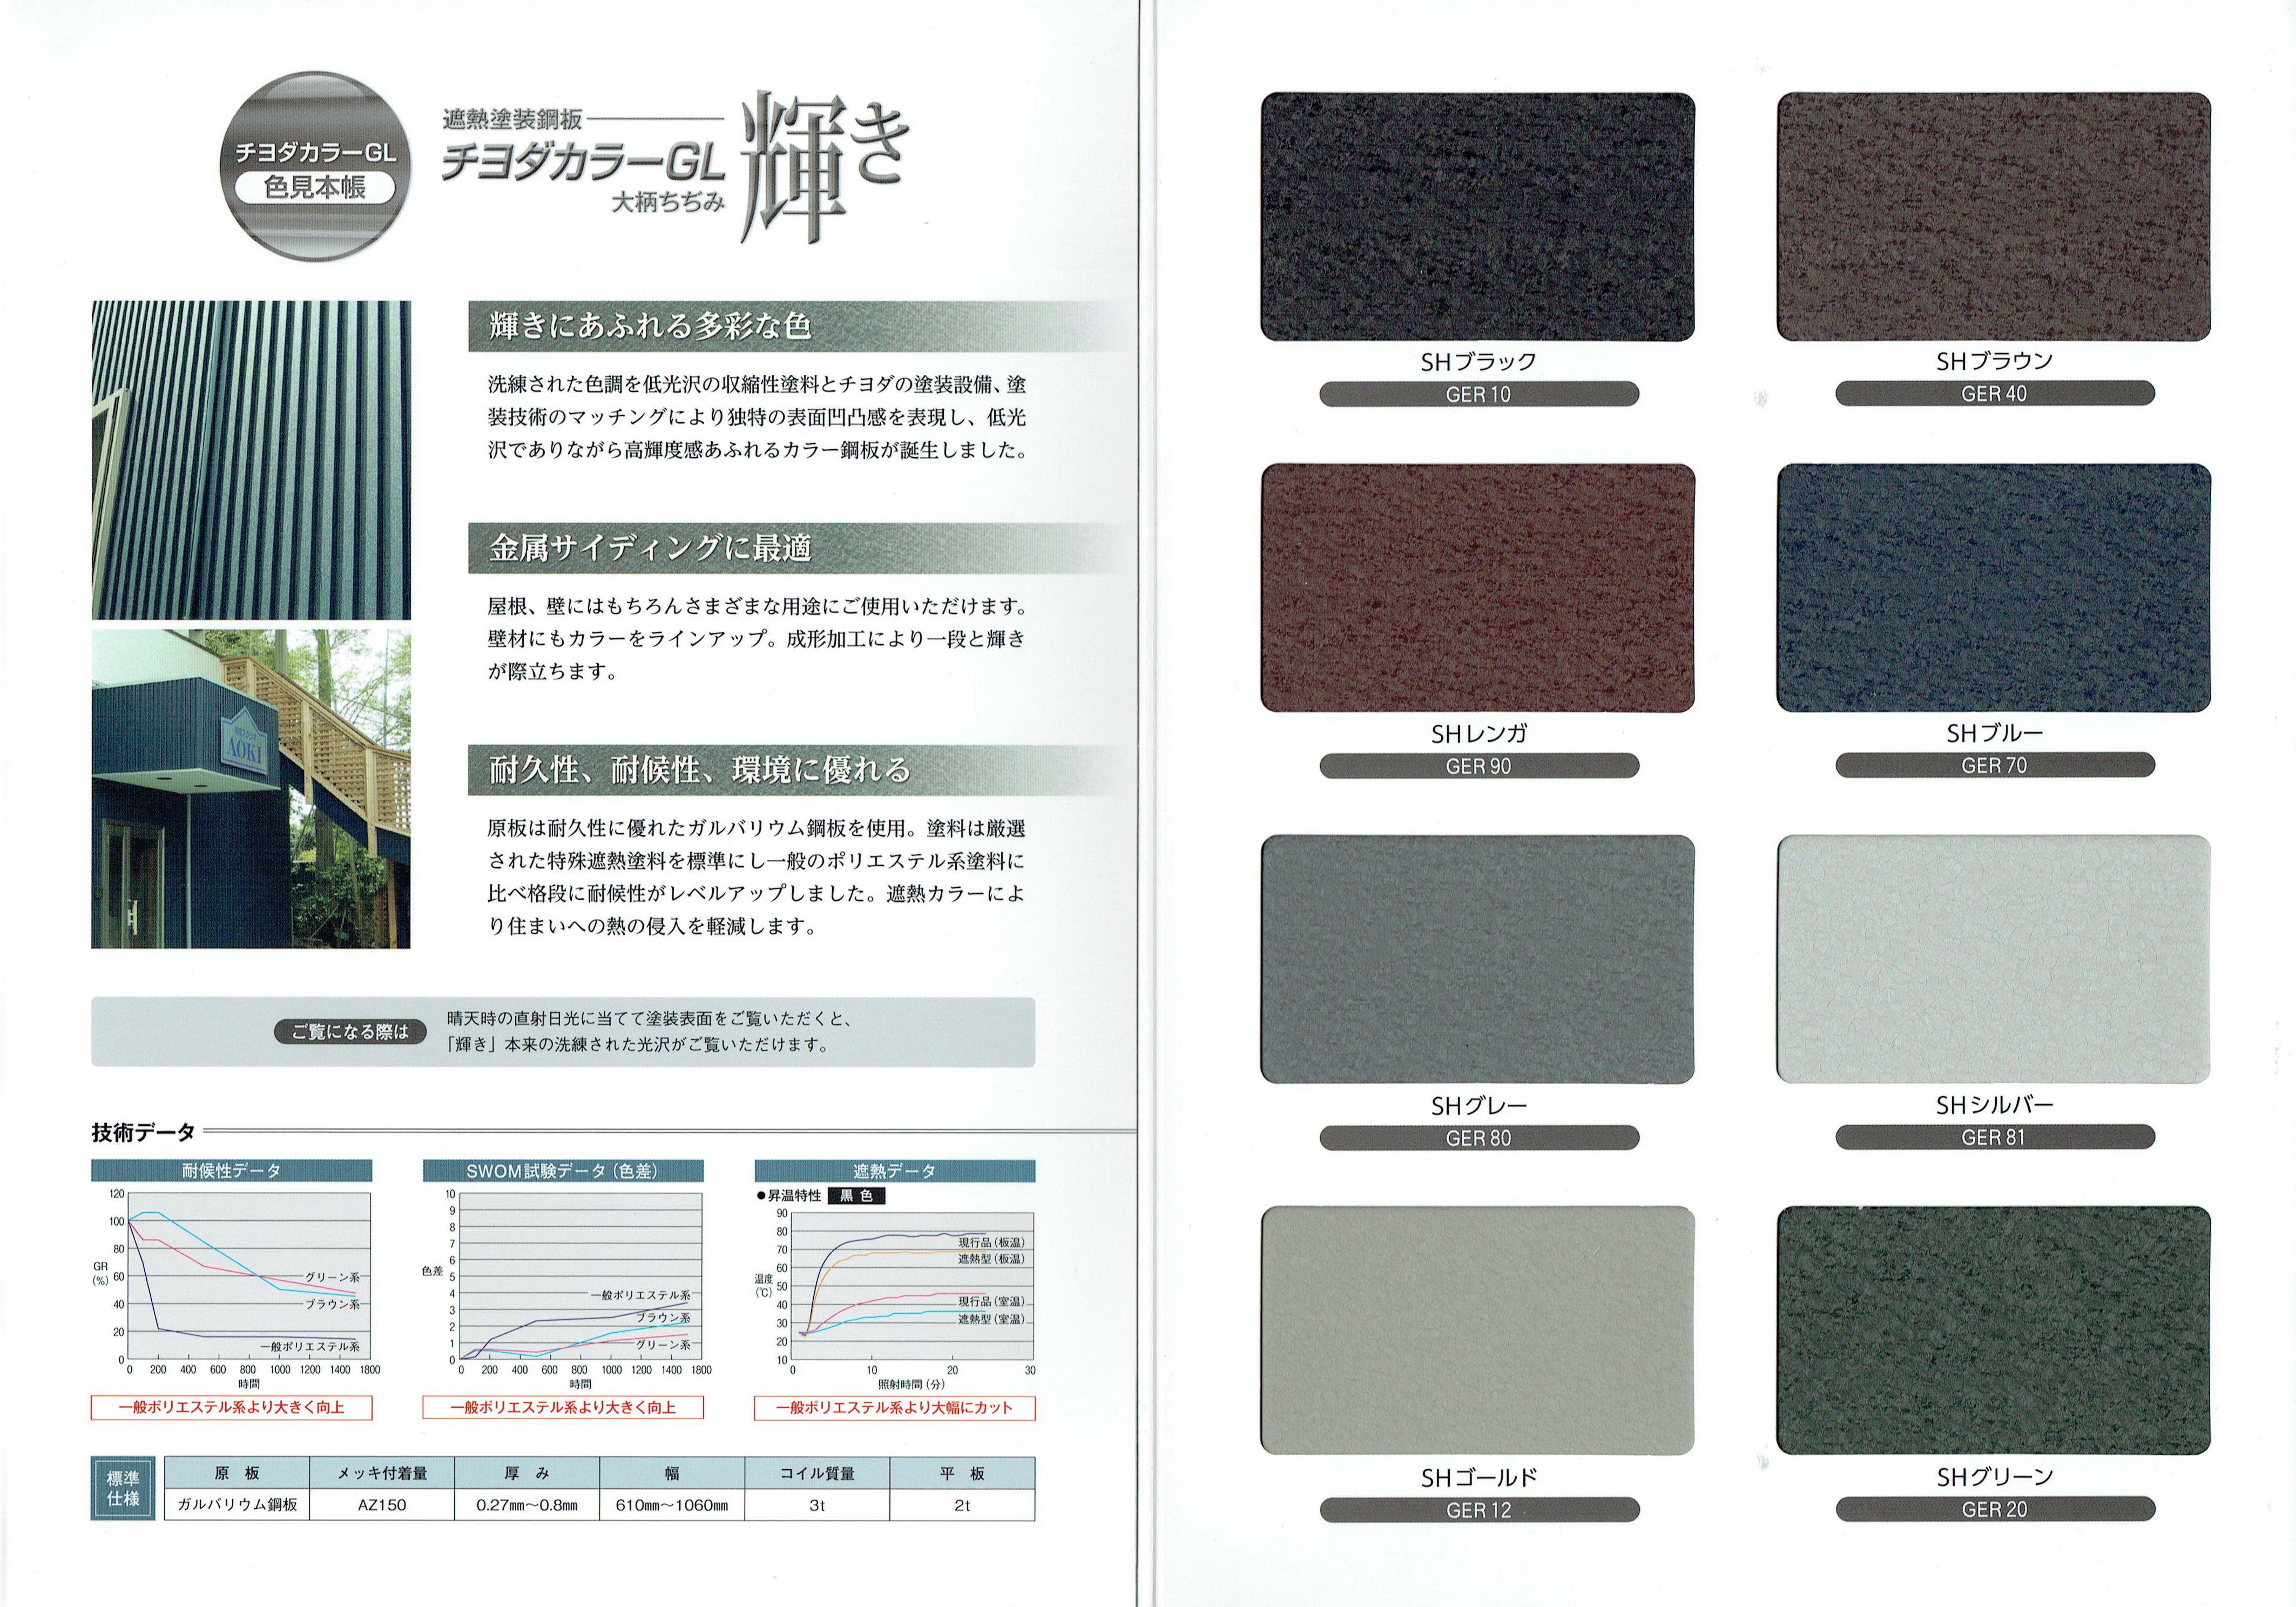 TETSUKO TETSUKO カラー鋼板 極み-MAX グレーシルバーKNC t0.5mm